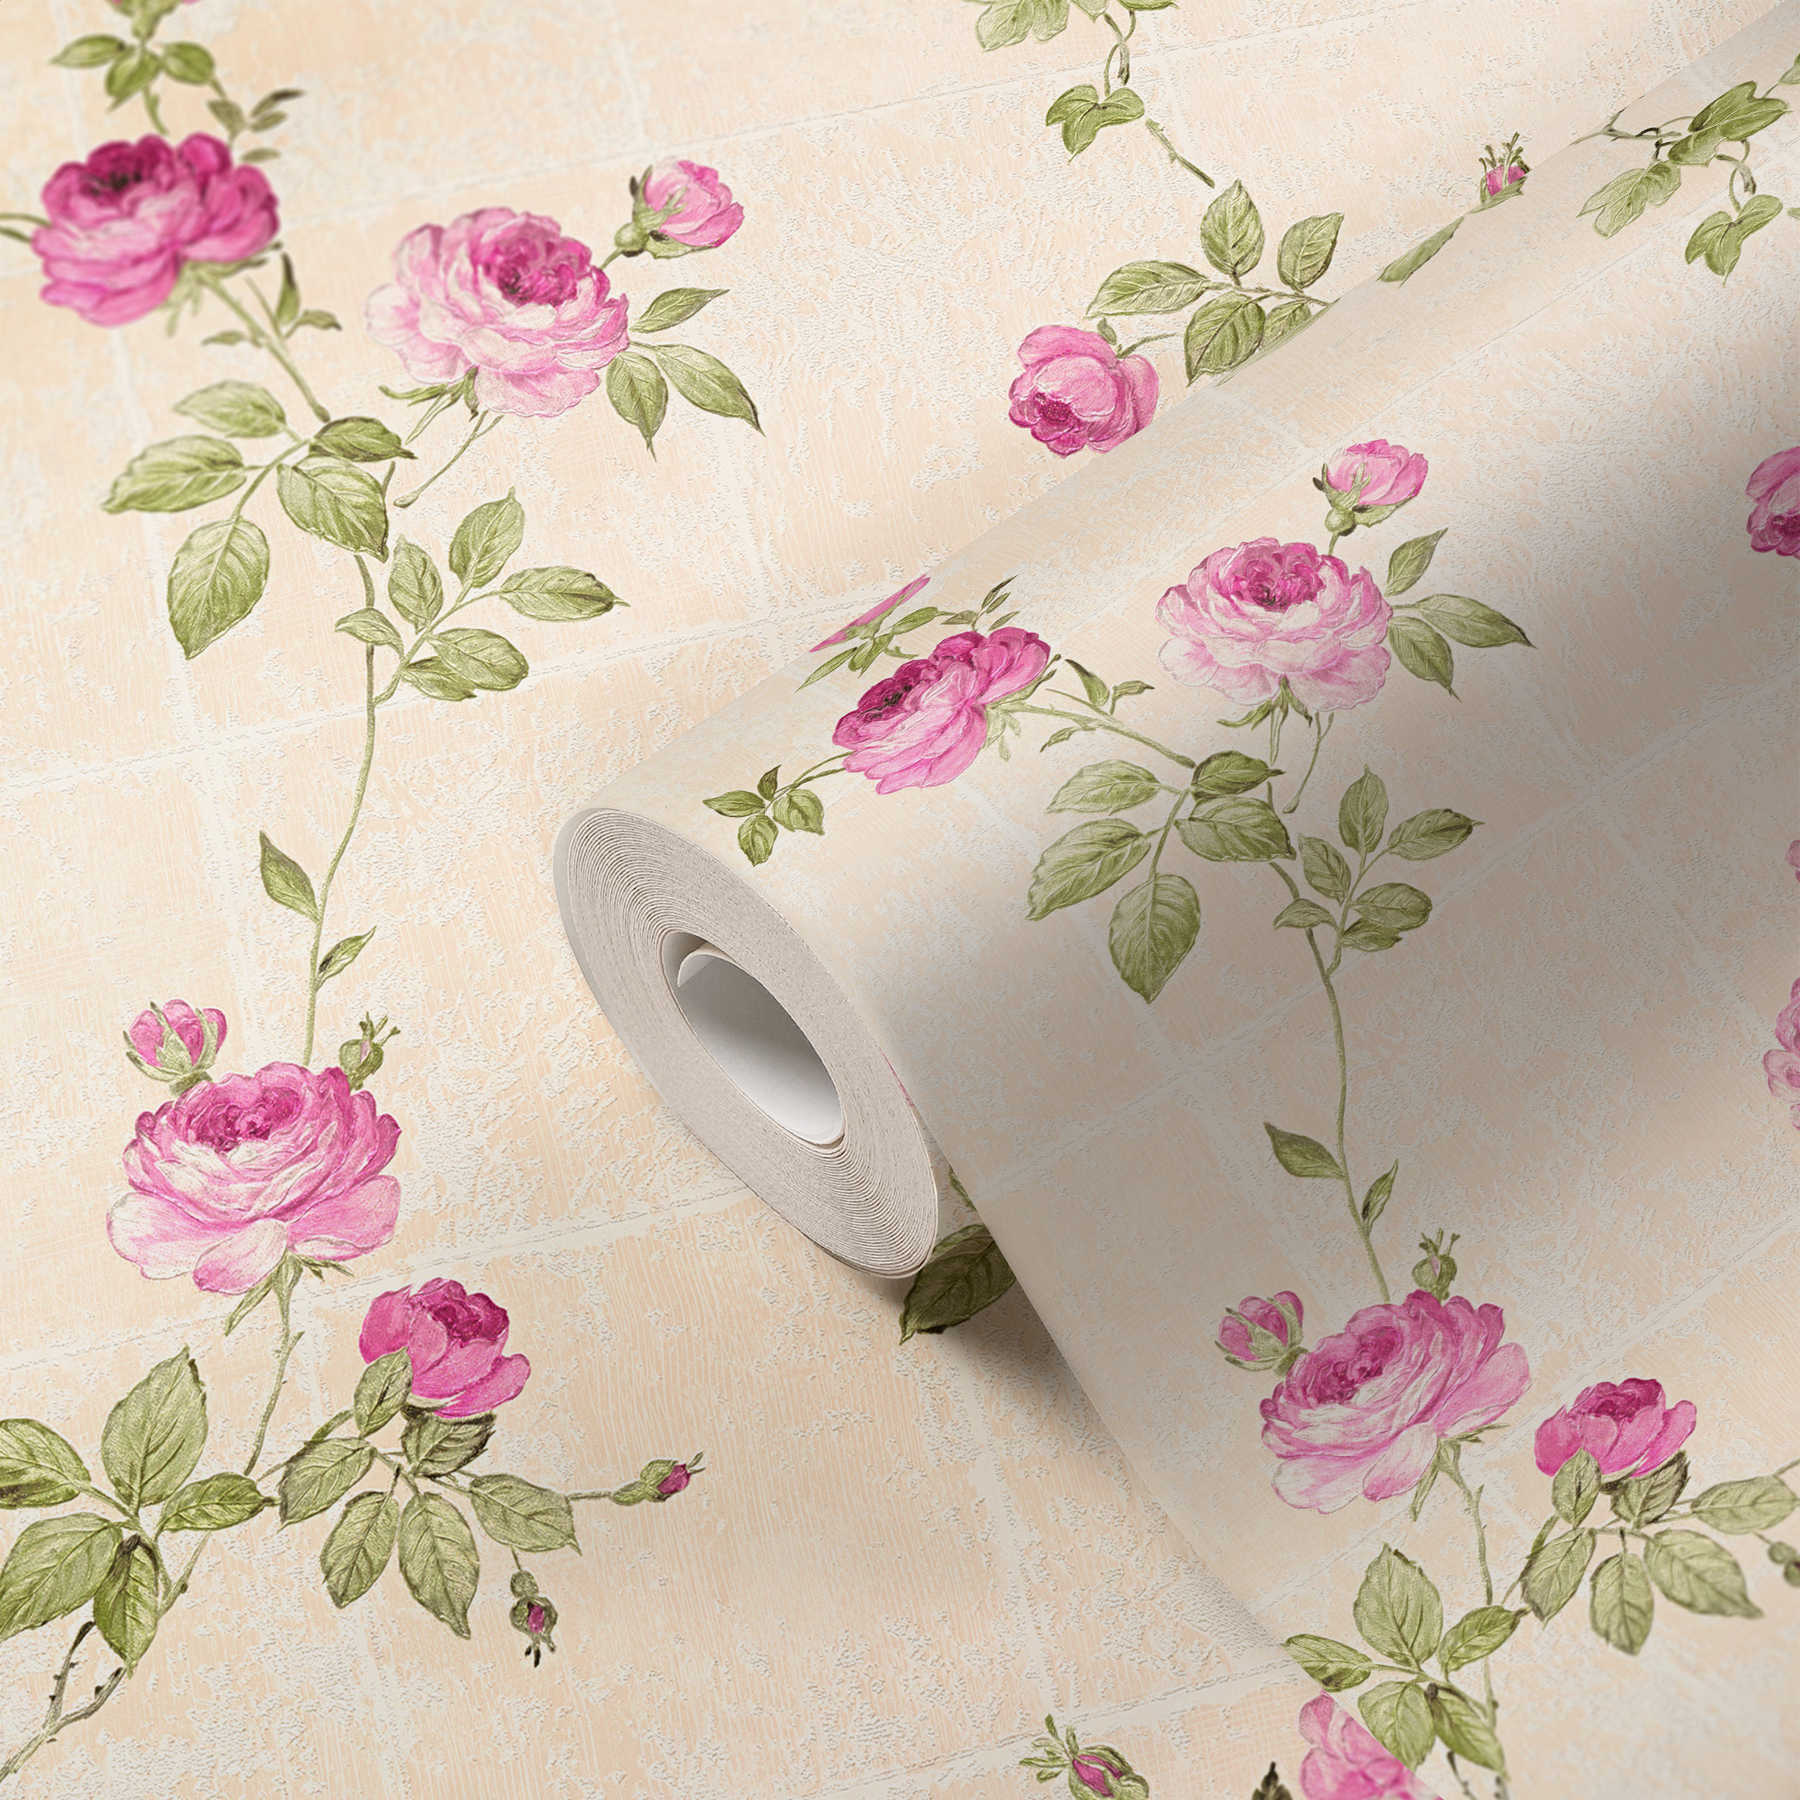             Tile look wallpaper with rose vines - beige, green, pink
        